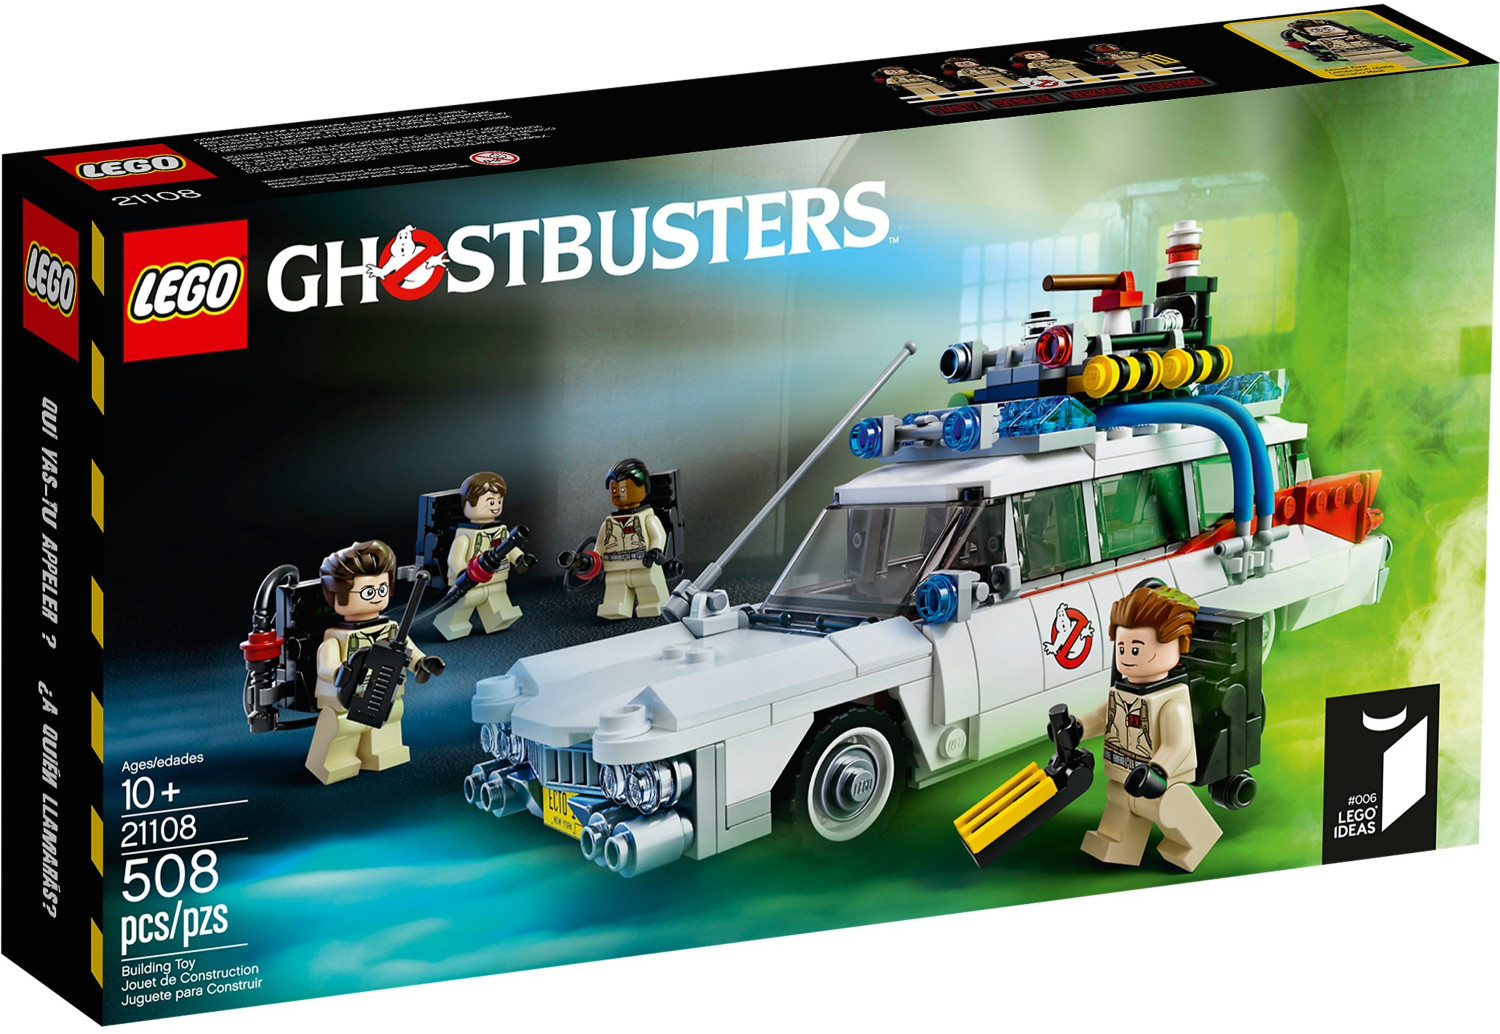 LEGO Ghostbusters Ecto-1 (21108)